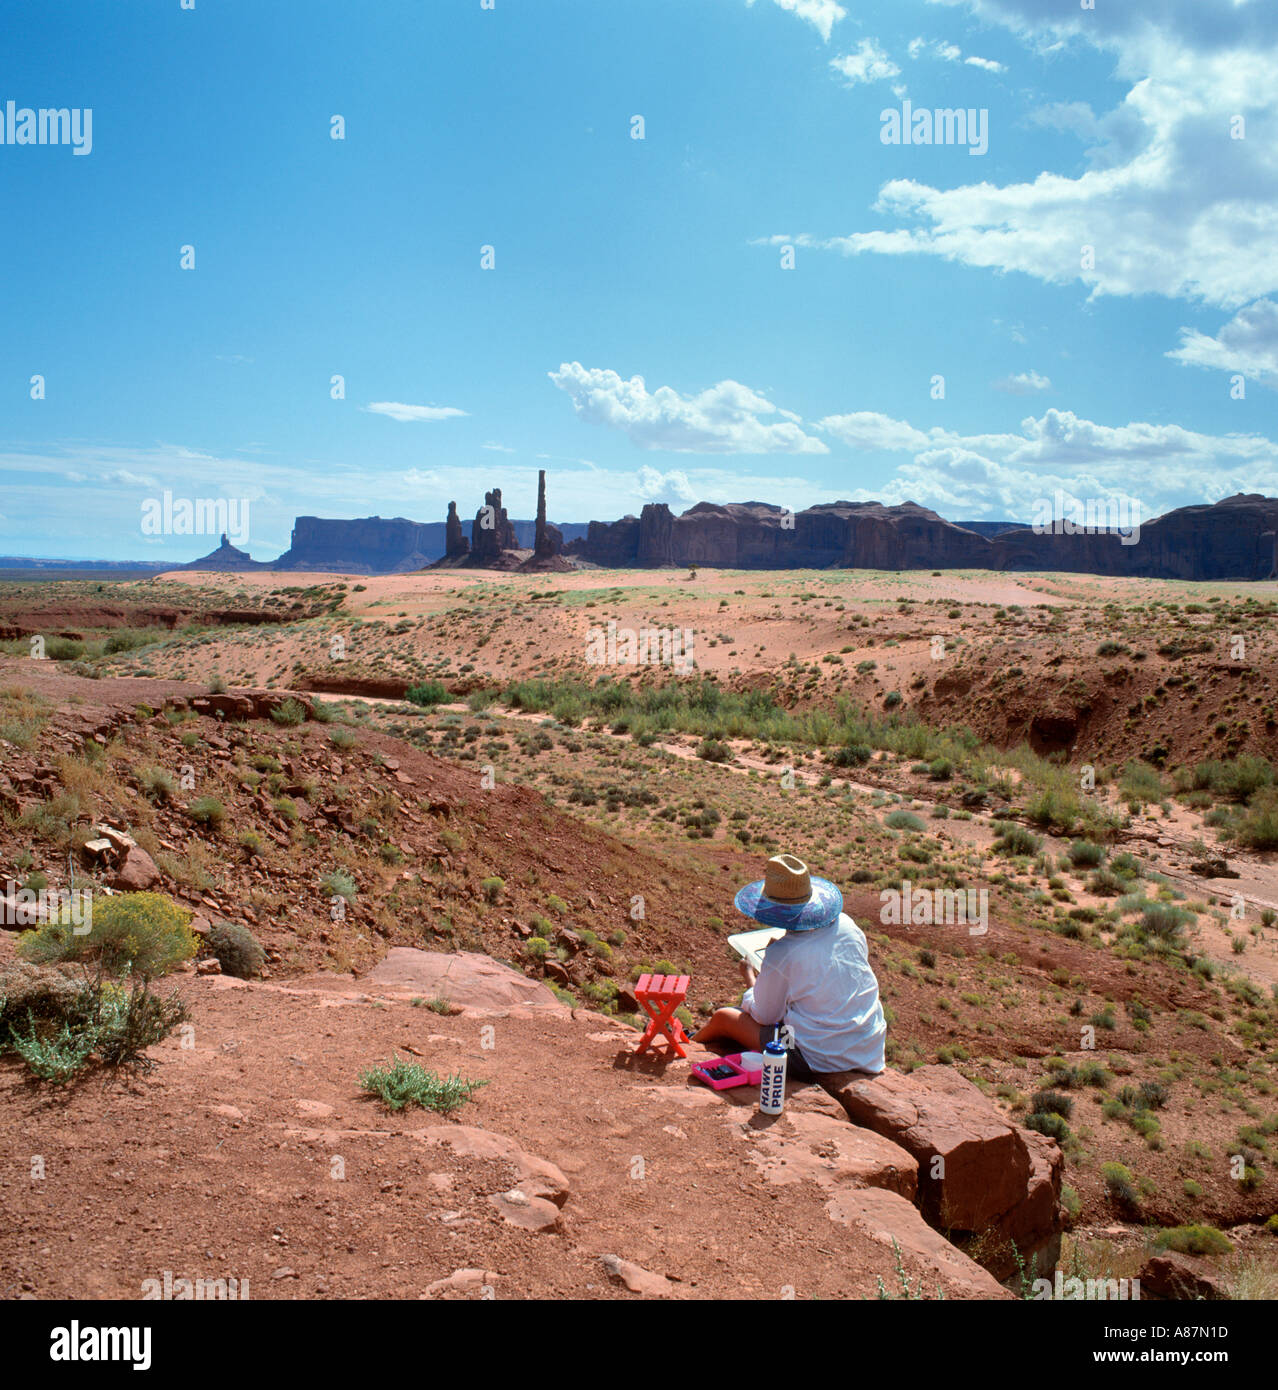 An artist painting in the Navajo Tribal Park, Monument Valley, Arizona/Utah, USA Stock Photo